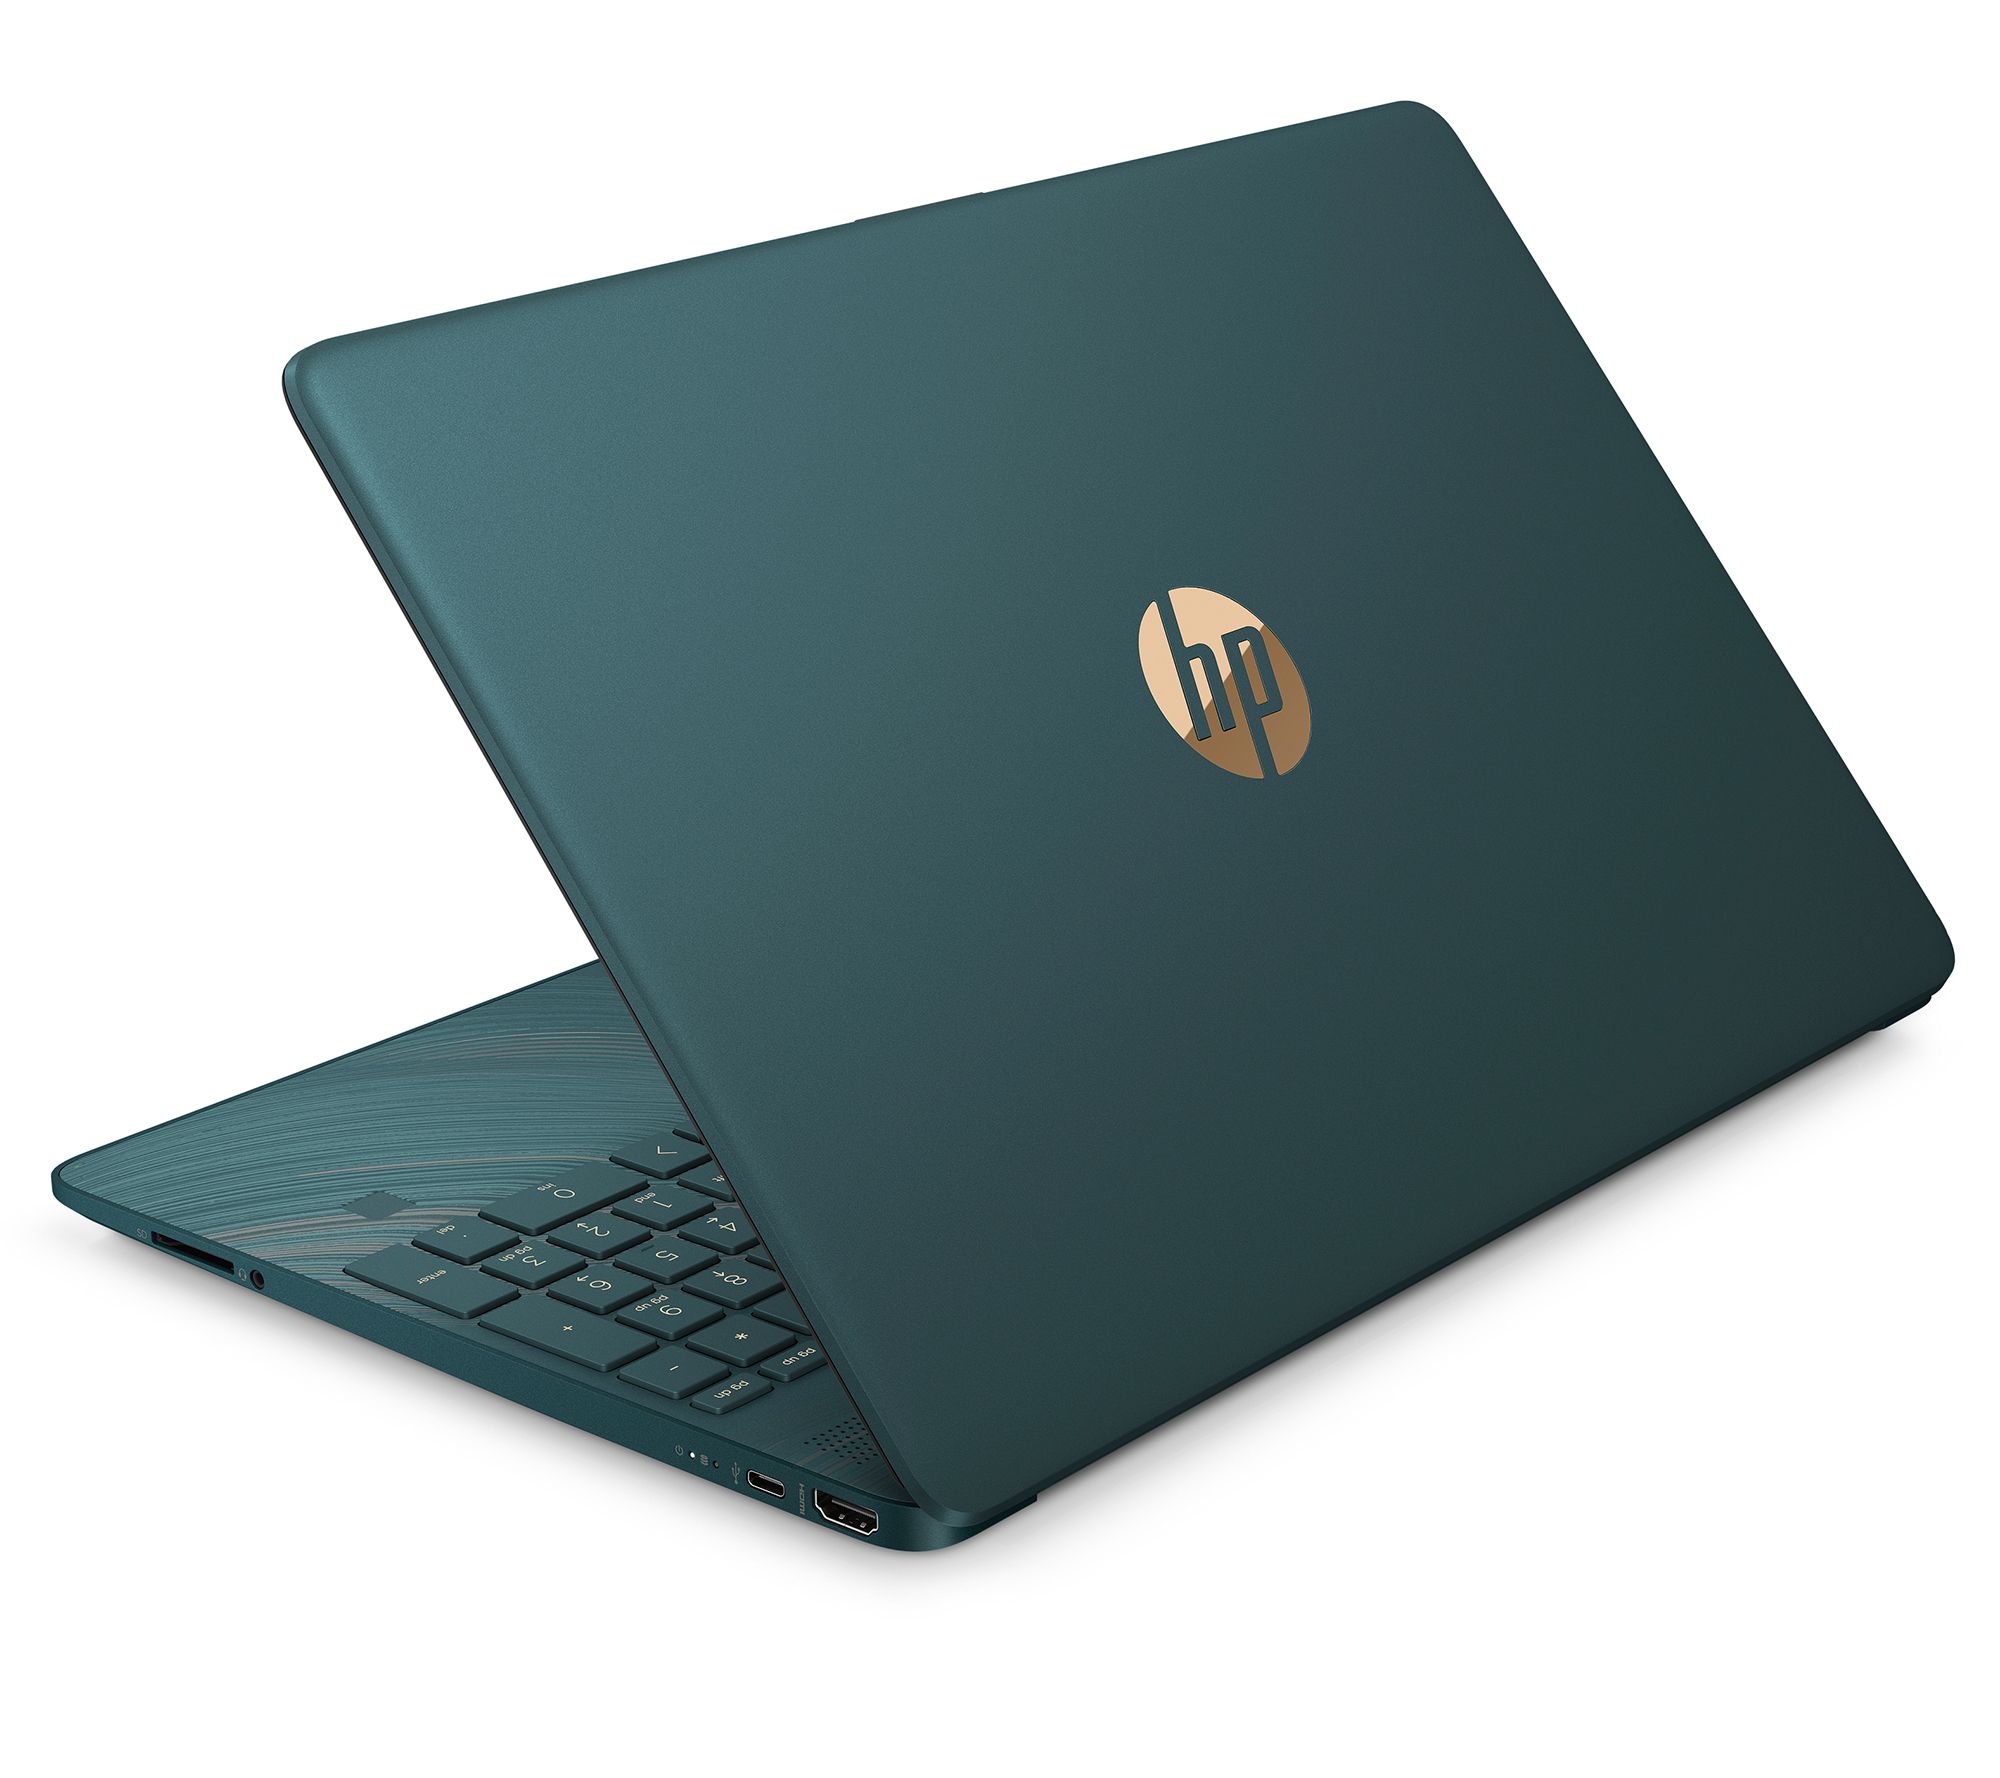 HP Newest 15.6" FHD Notebook Laptop Computer, Intel Celeron N4020  Processor, 8GB DDR4 RAM, 512GB SSD, 1-Year Office 365, Webcam, WiFi, RJ-45,  Windows